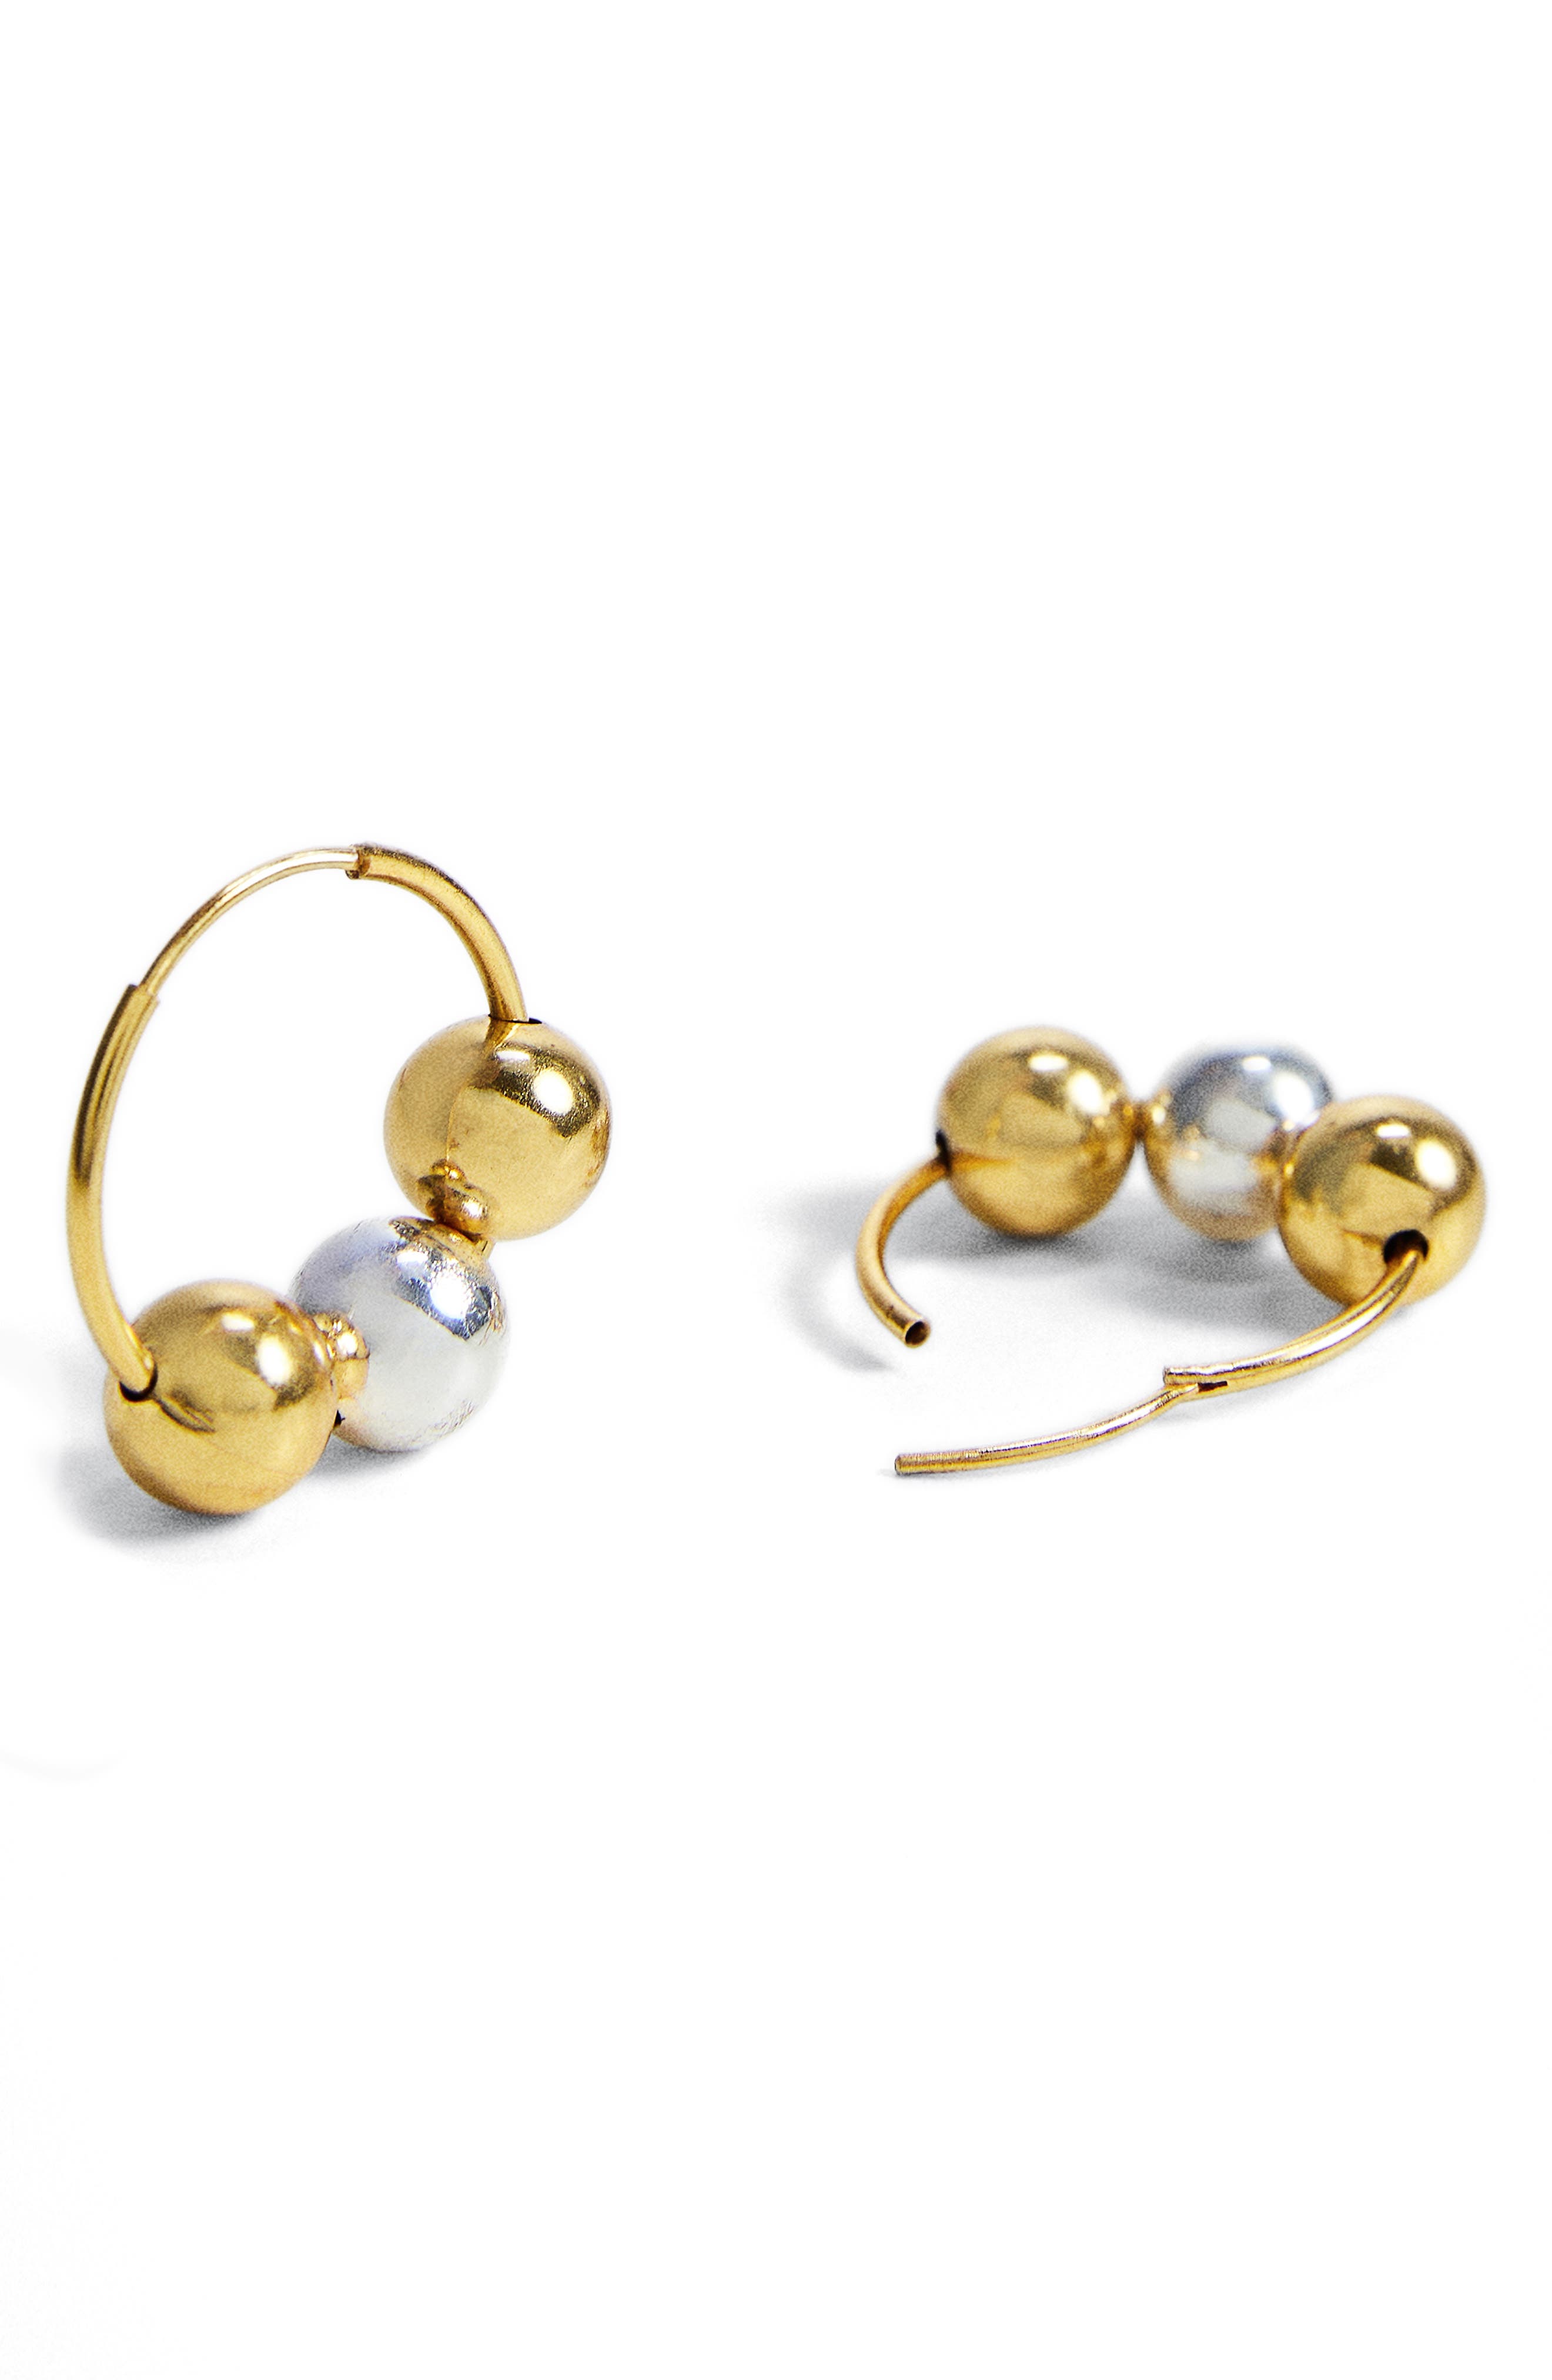 Teenage girl One size Mango Girls Accessories Jewelry Earrings Pack of 3 earrings 